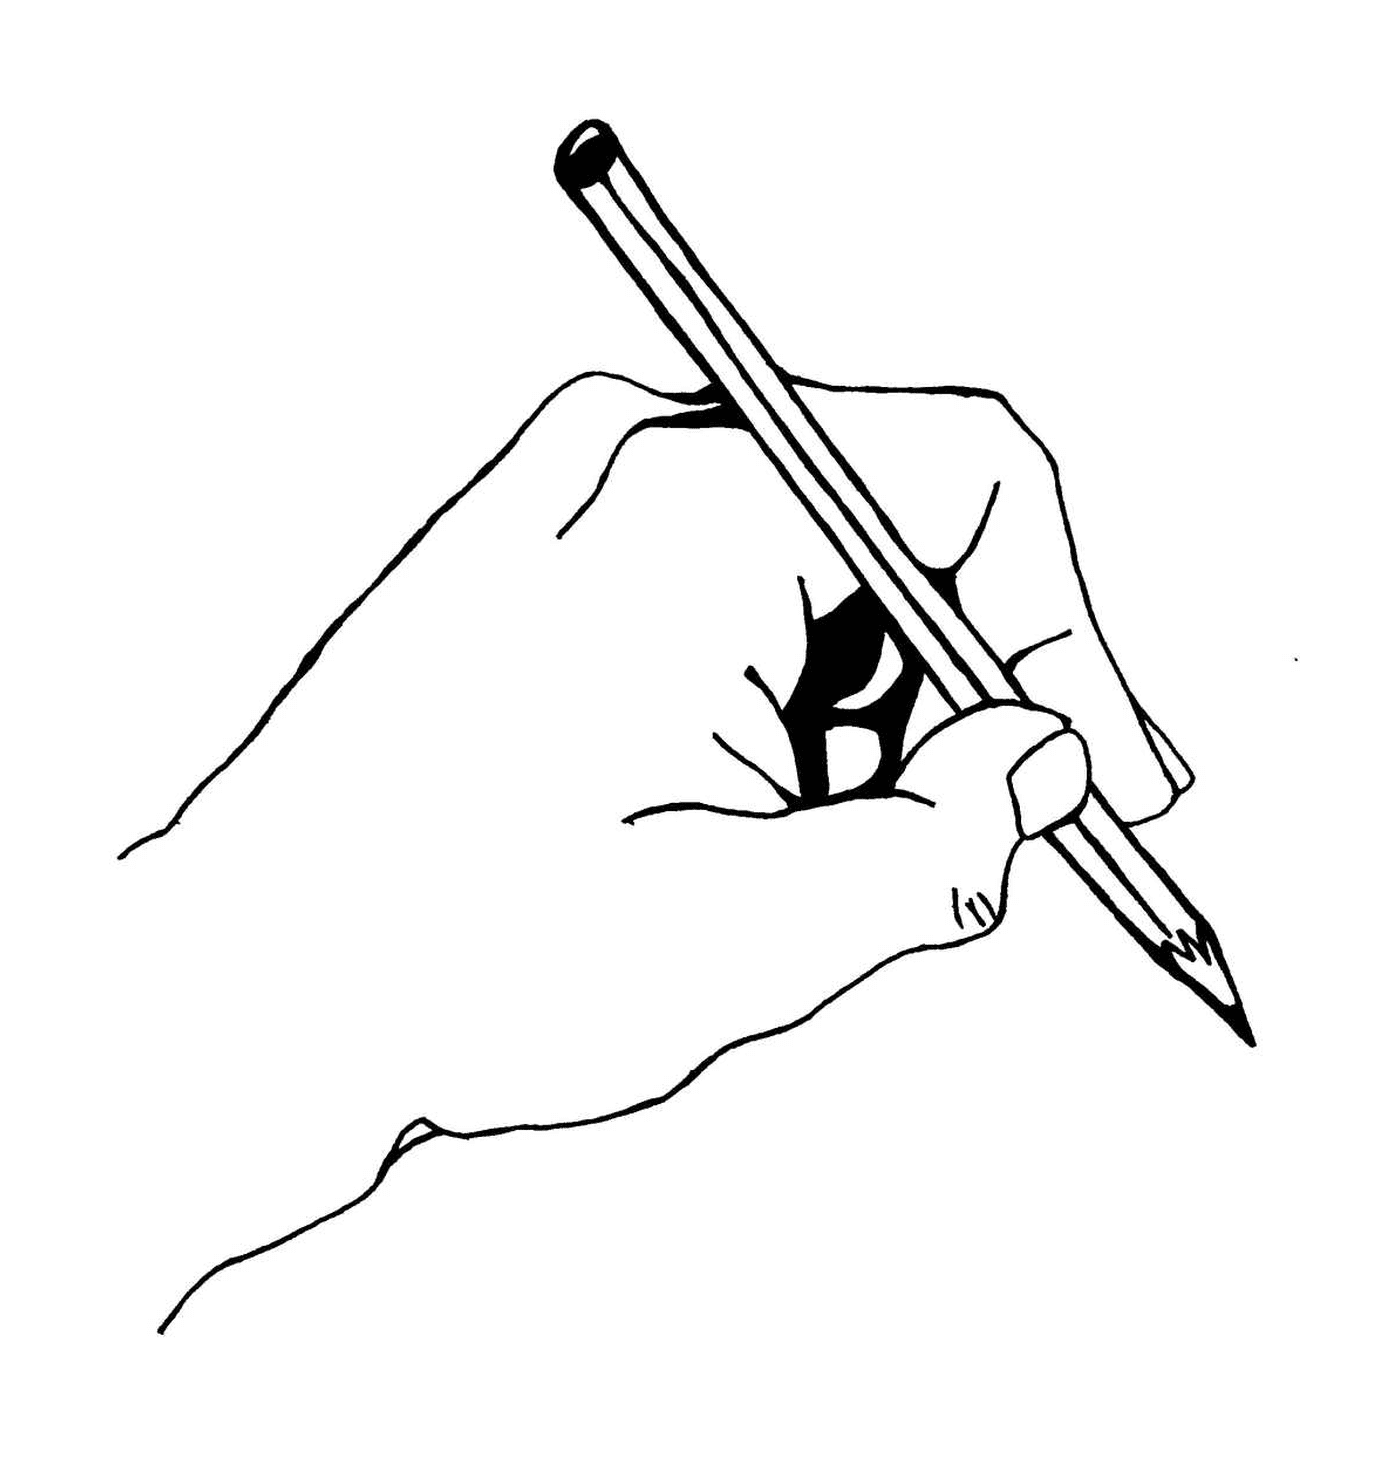 coloriage main dessinant avec un crayon